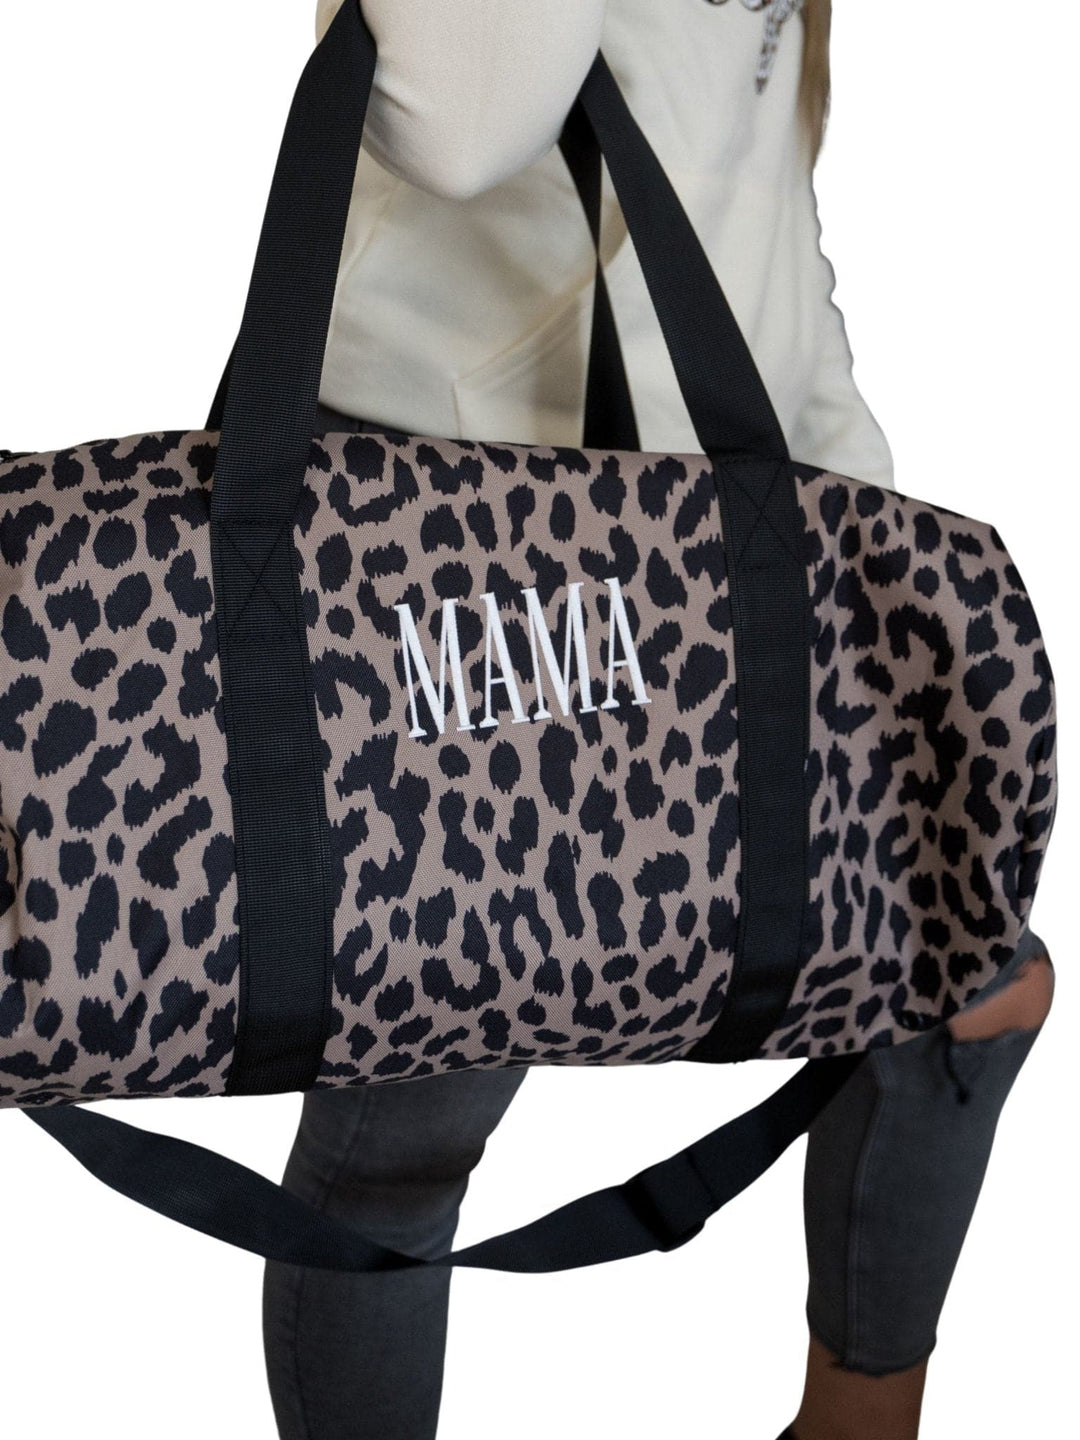 MAMA Embroidered Duffle Bag - Cheetah